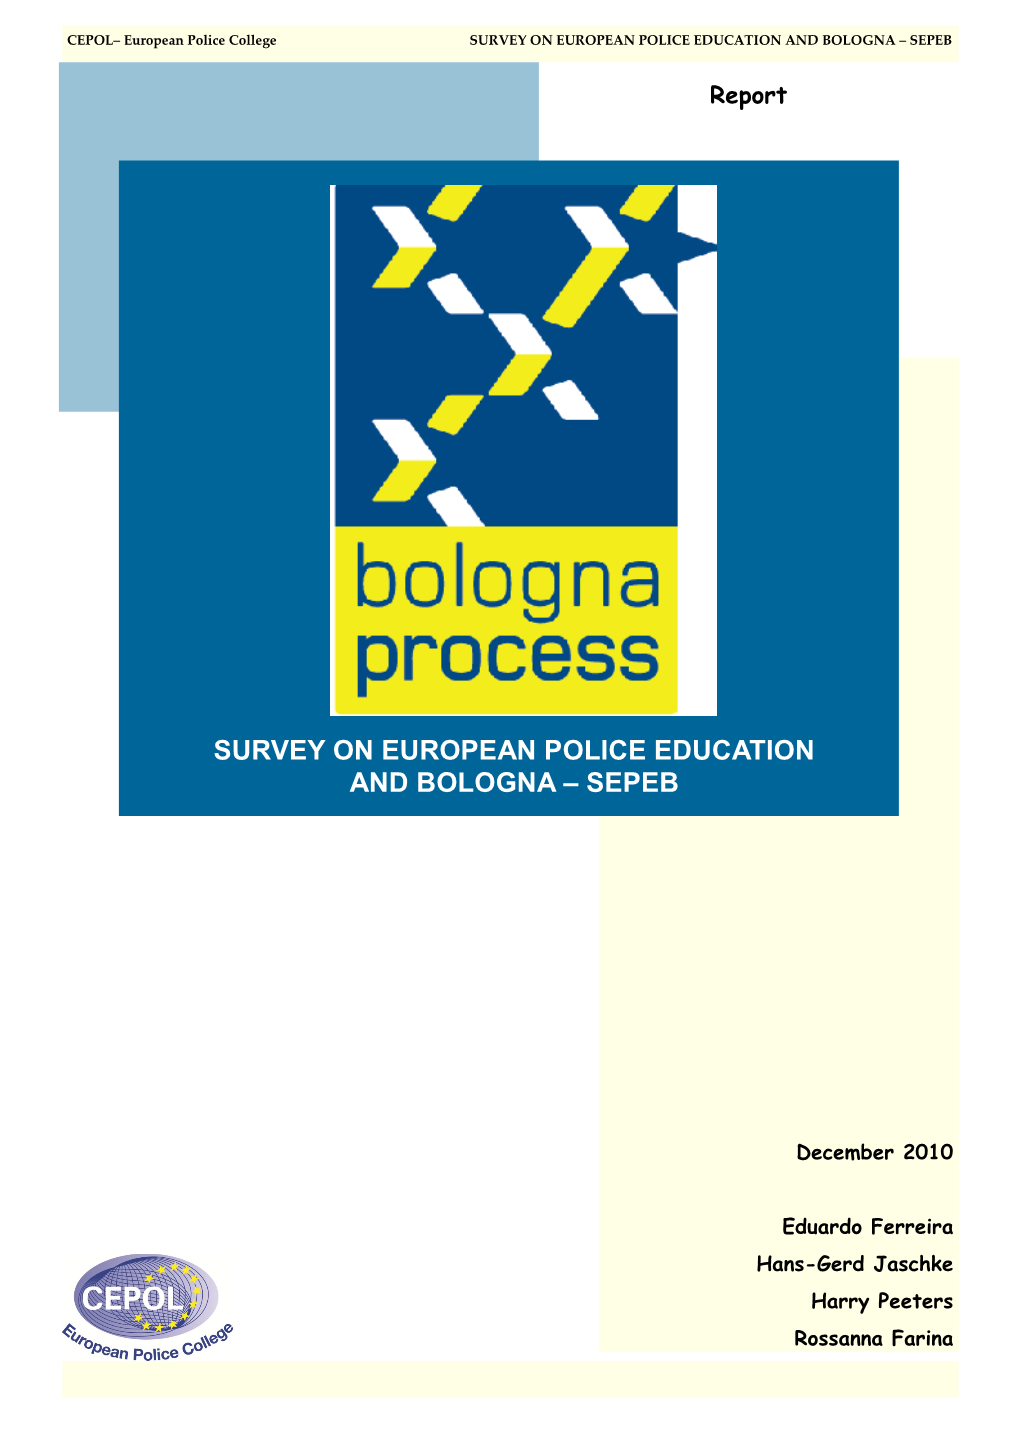 "Survey on European Police Education and Bologna